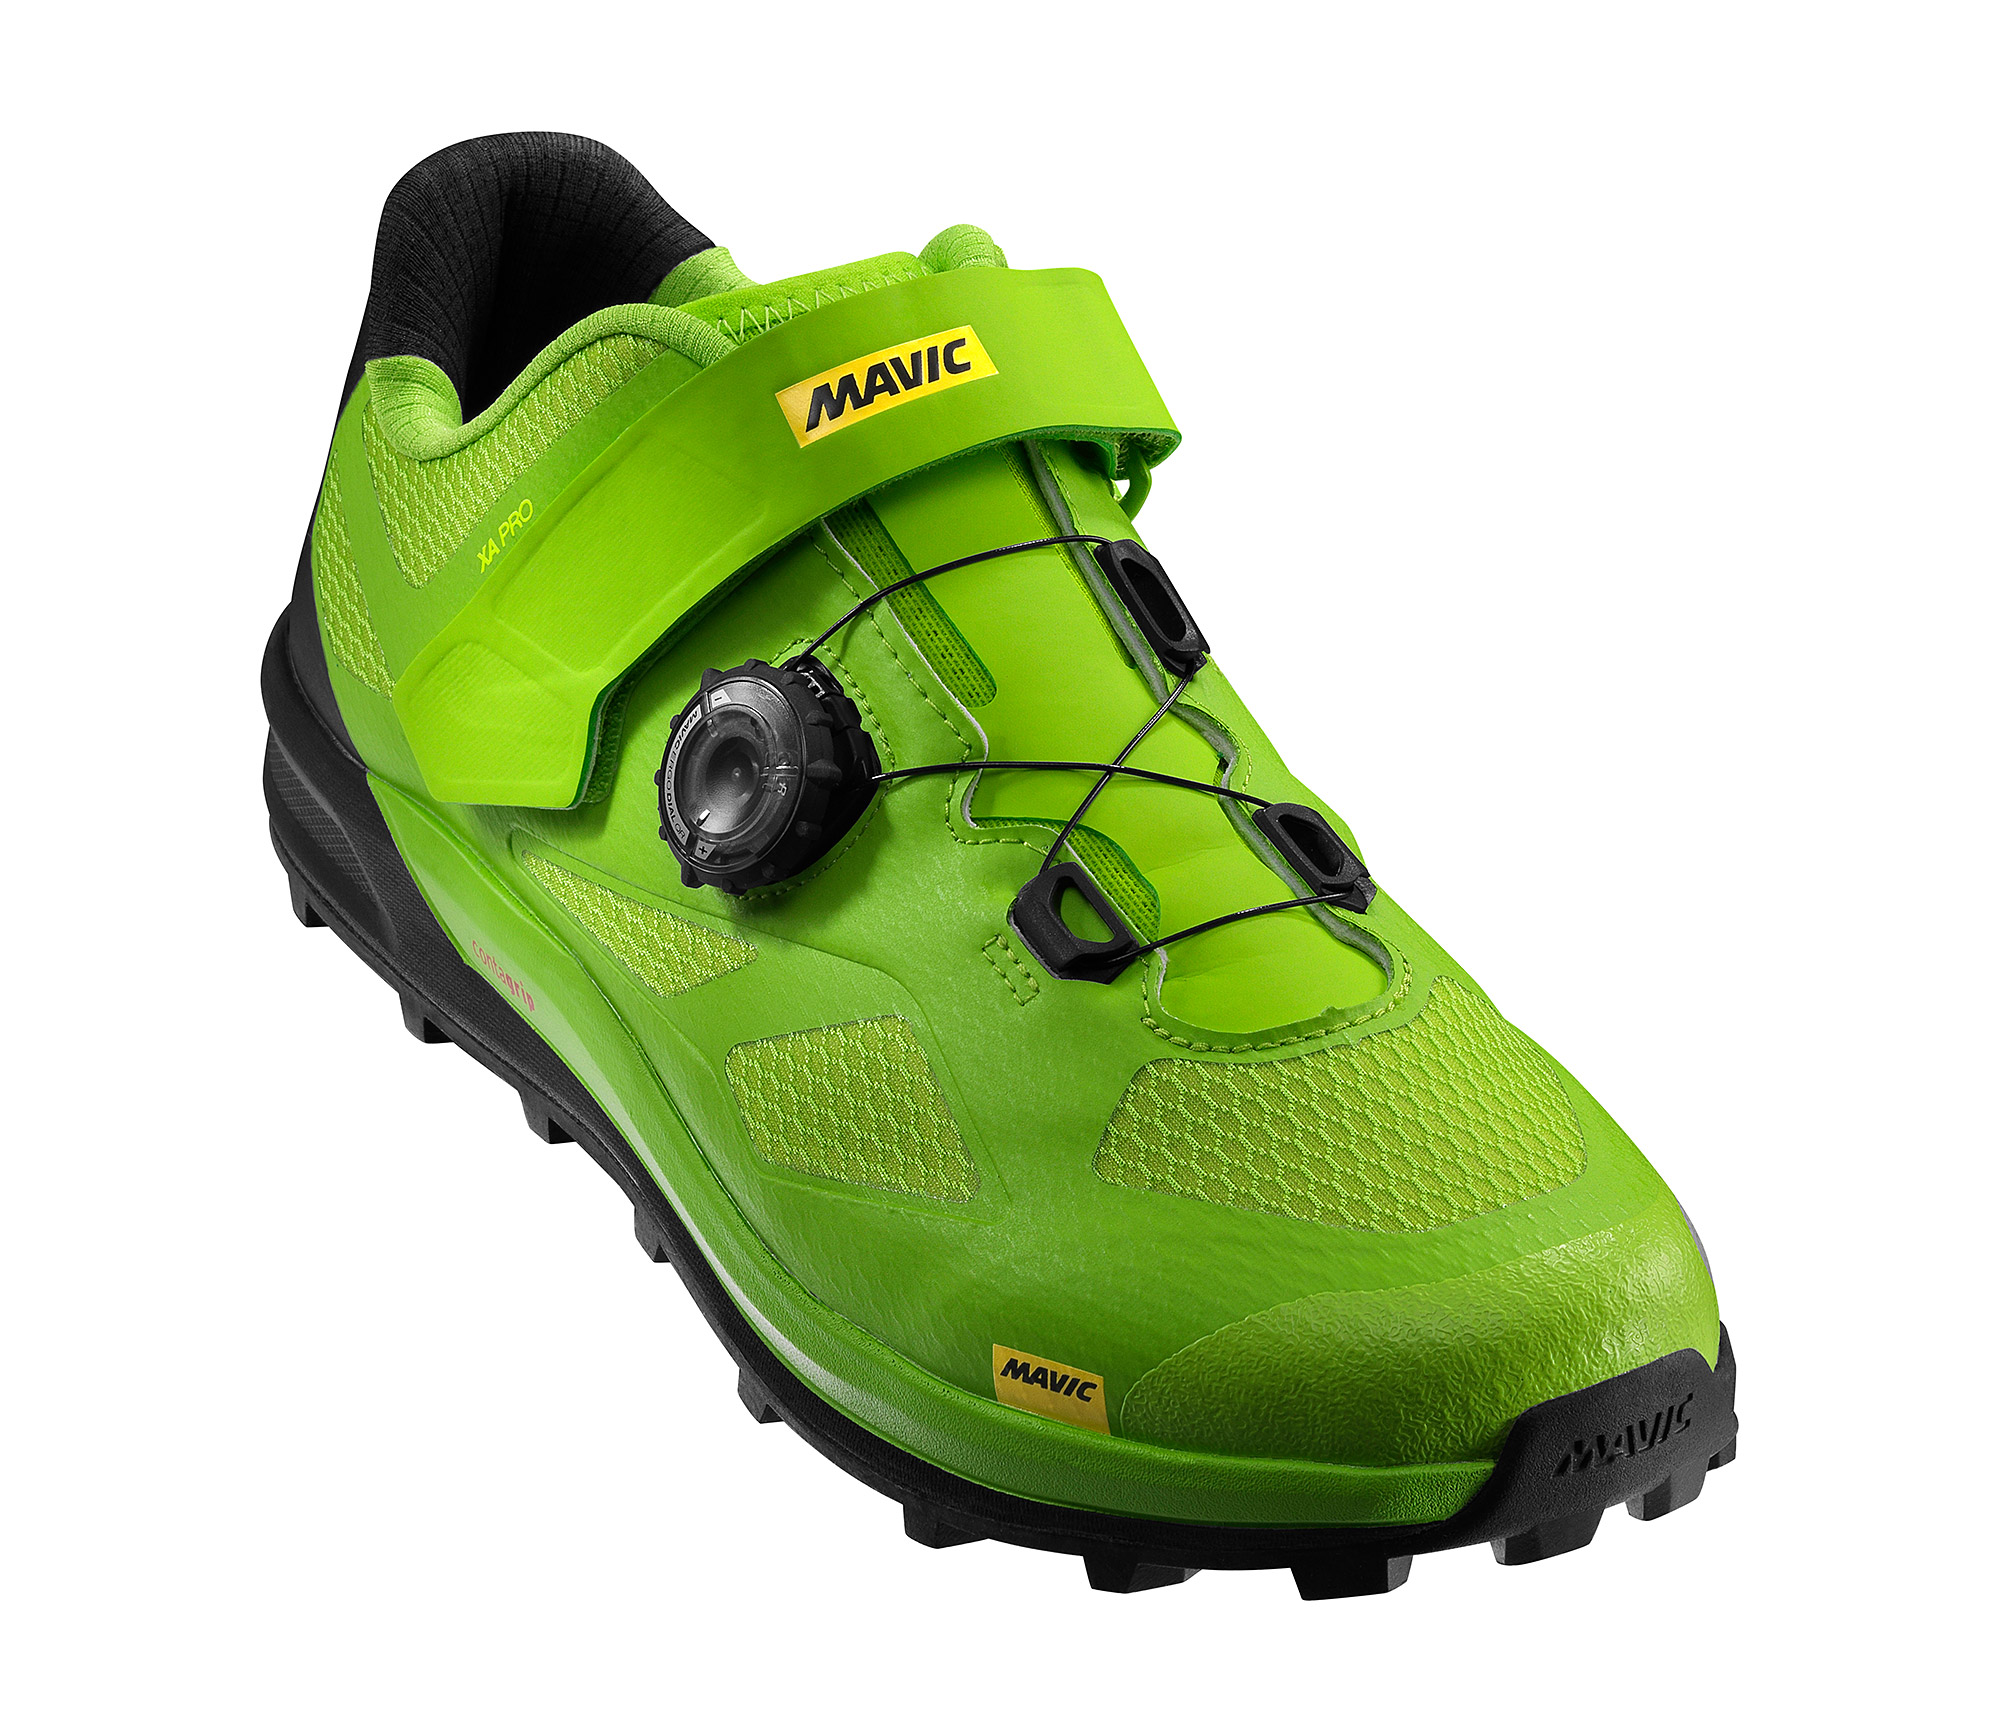 Обувь Mavic XA PRO, размер UK 12 (47 1/3, 299мм) Lime Green/Pirate Black салатово-черная